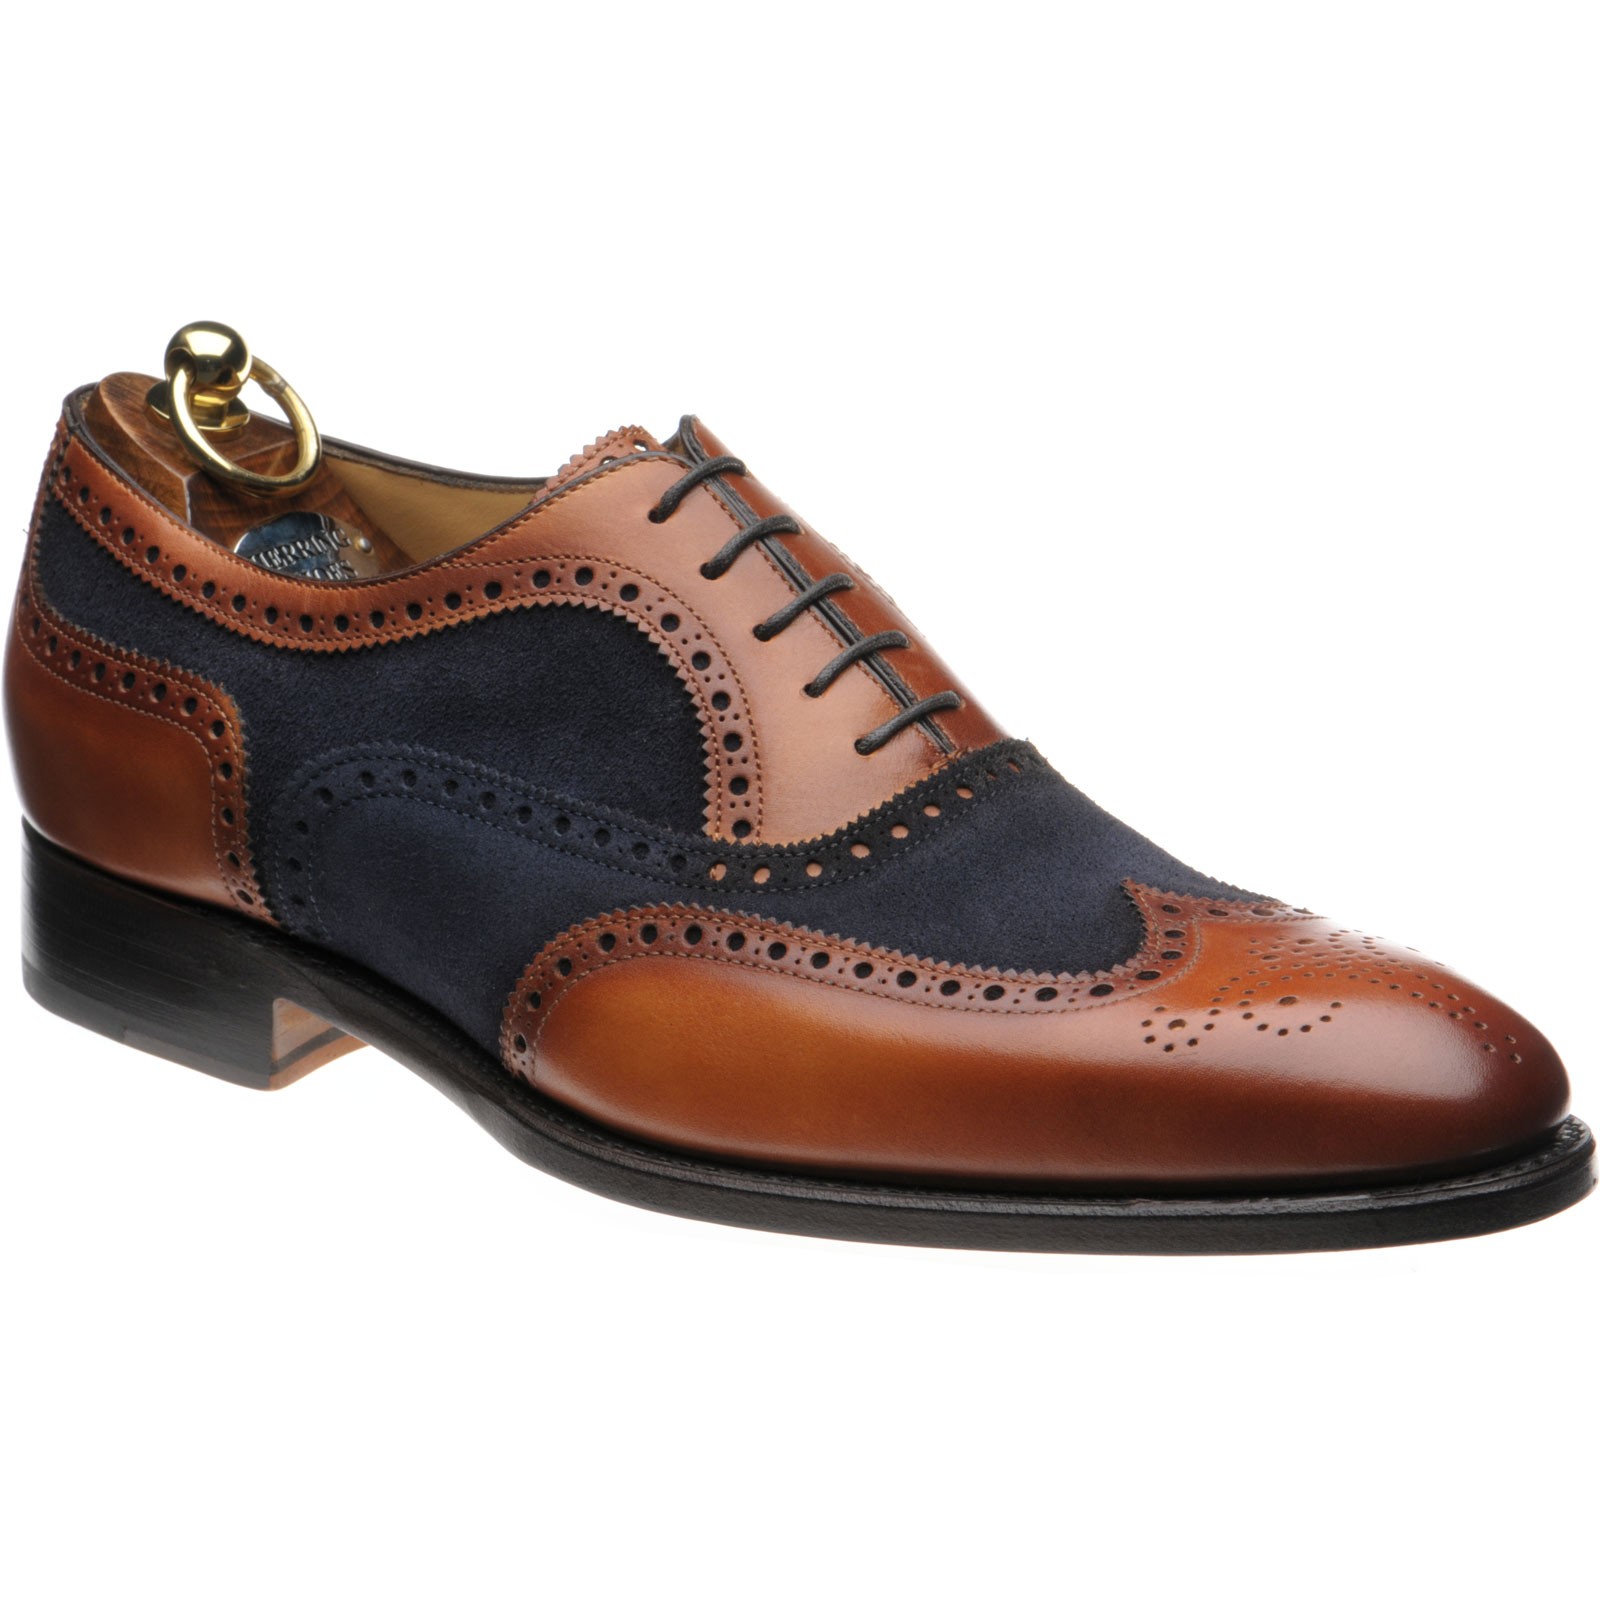 Herring shoes | Herring Classic | Farnham two-tone brogues in Chestnut ...